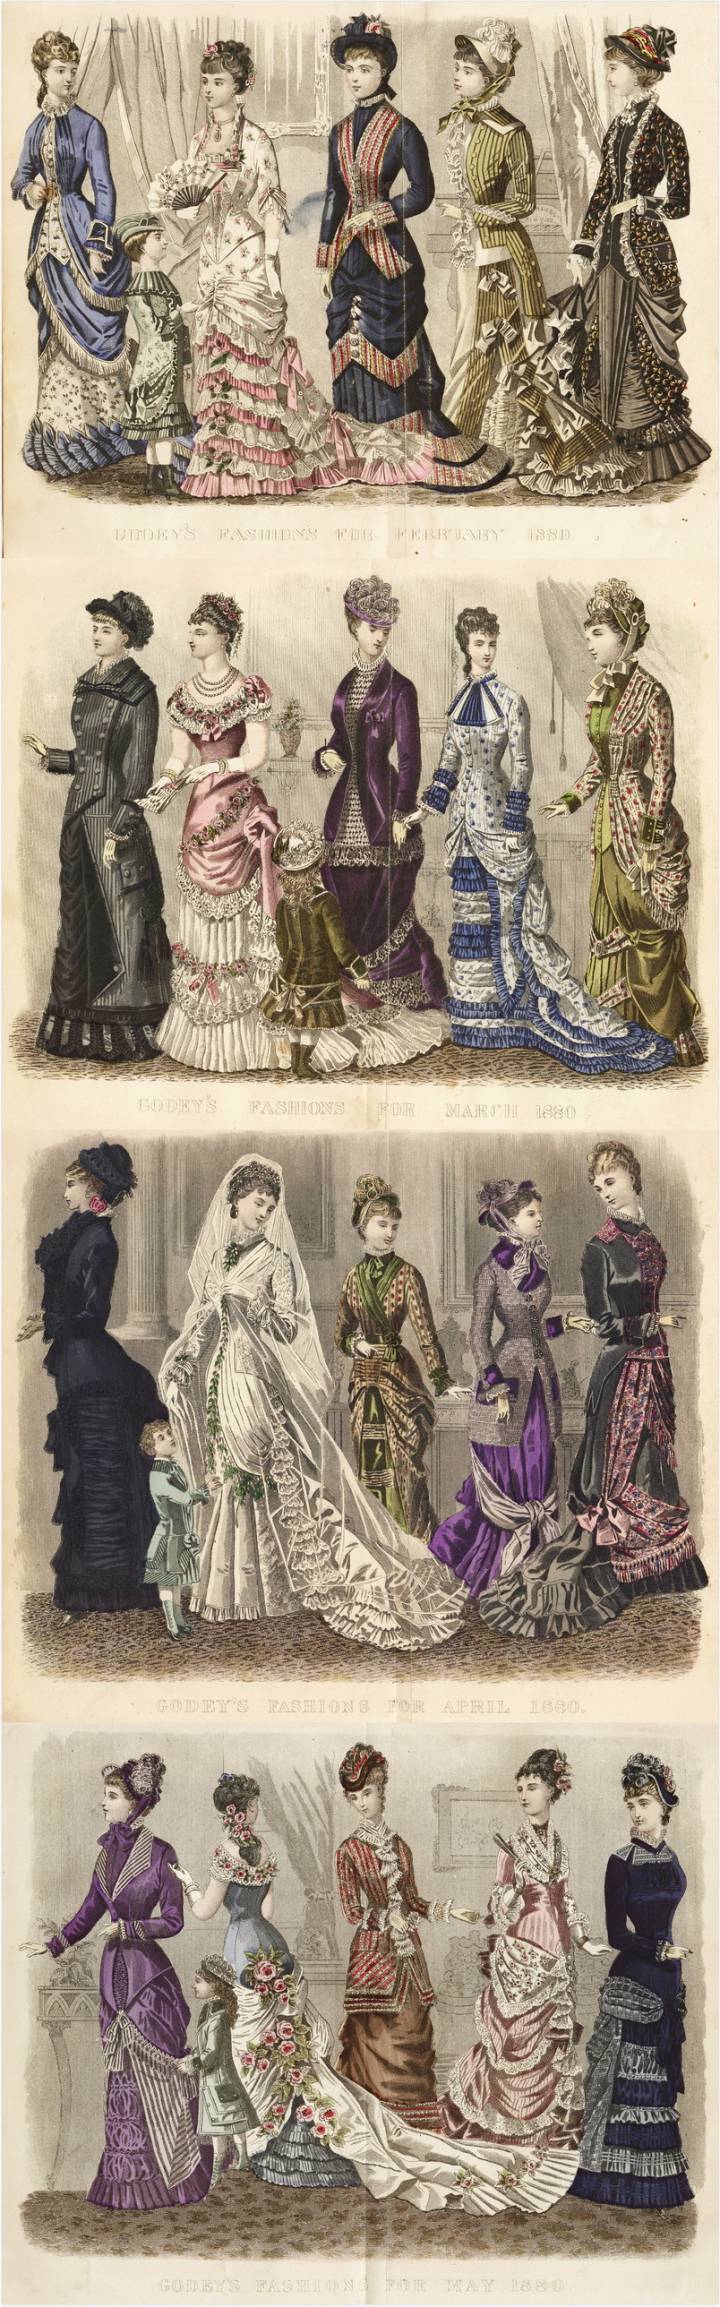 cp服装西方古代史中女装裙幅最窄的时期是18791881这三年